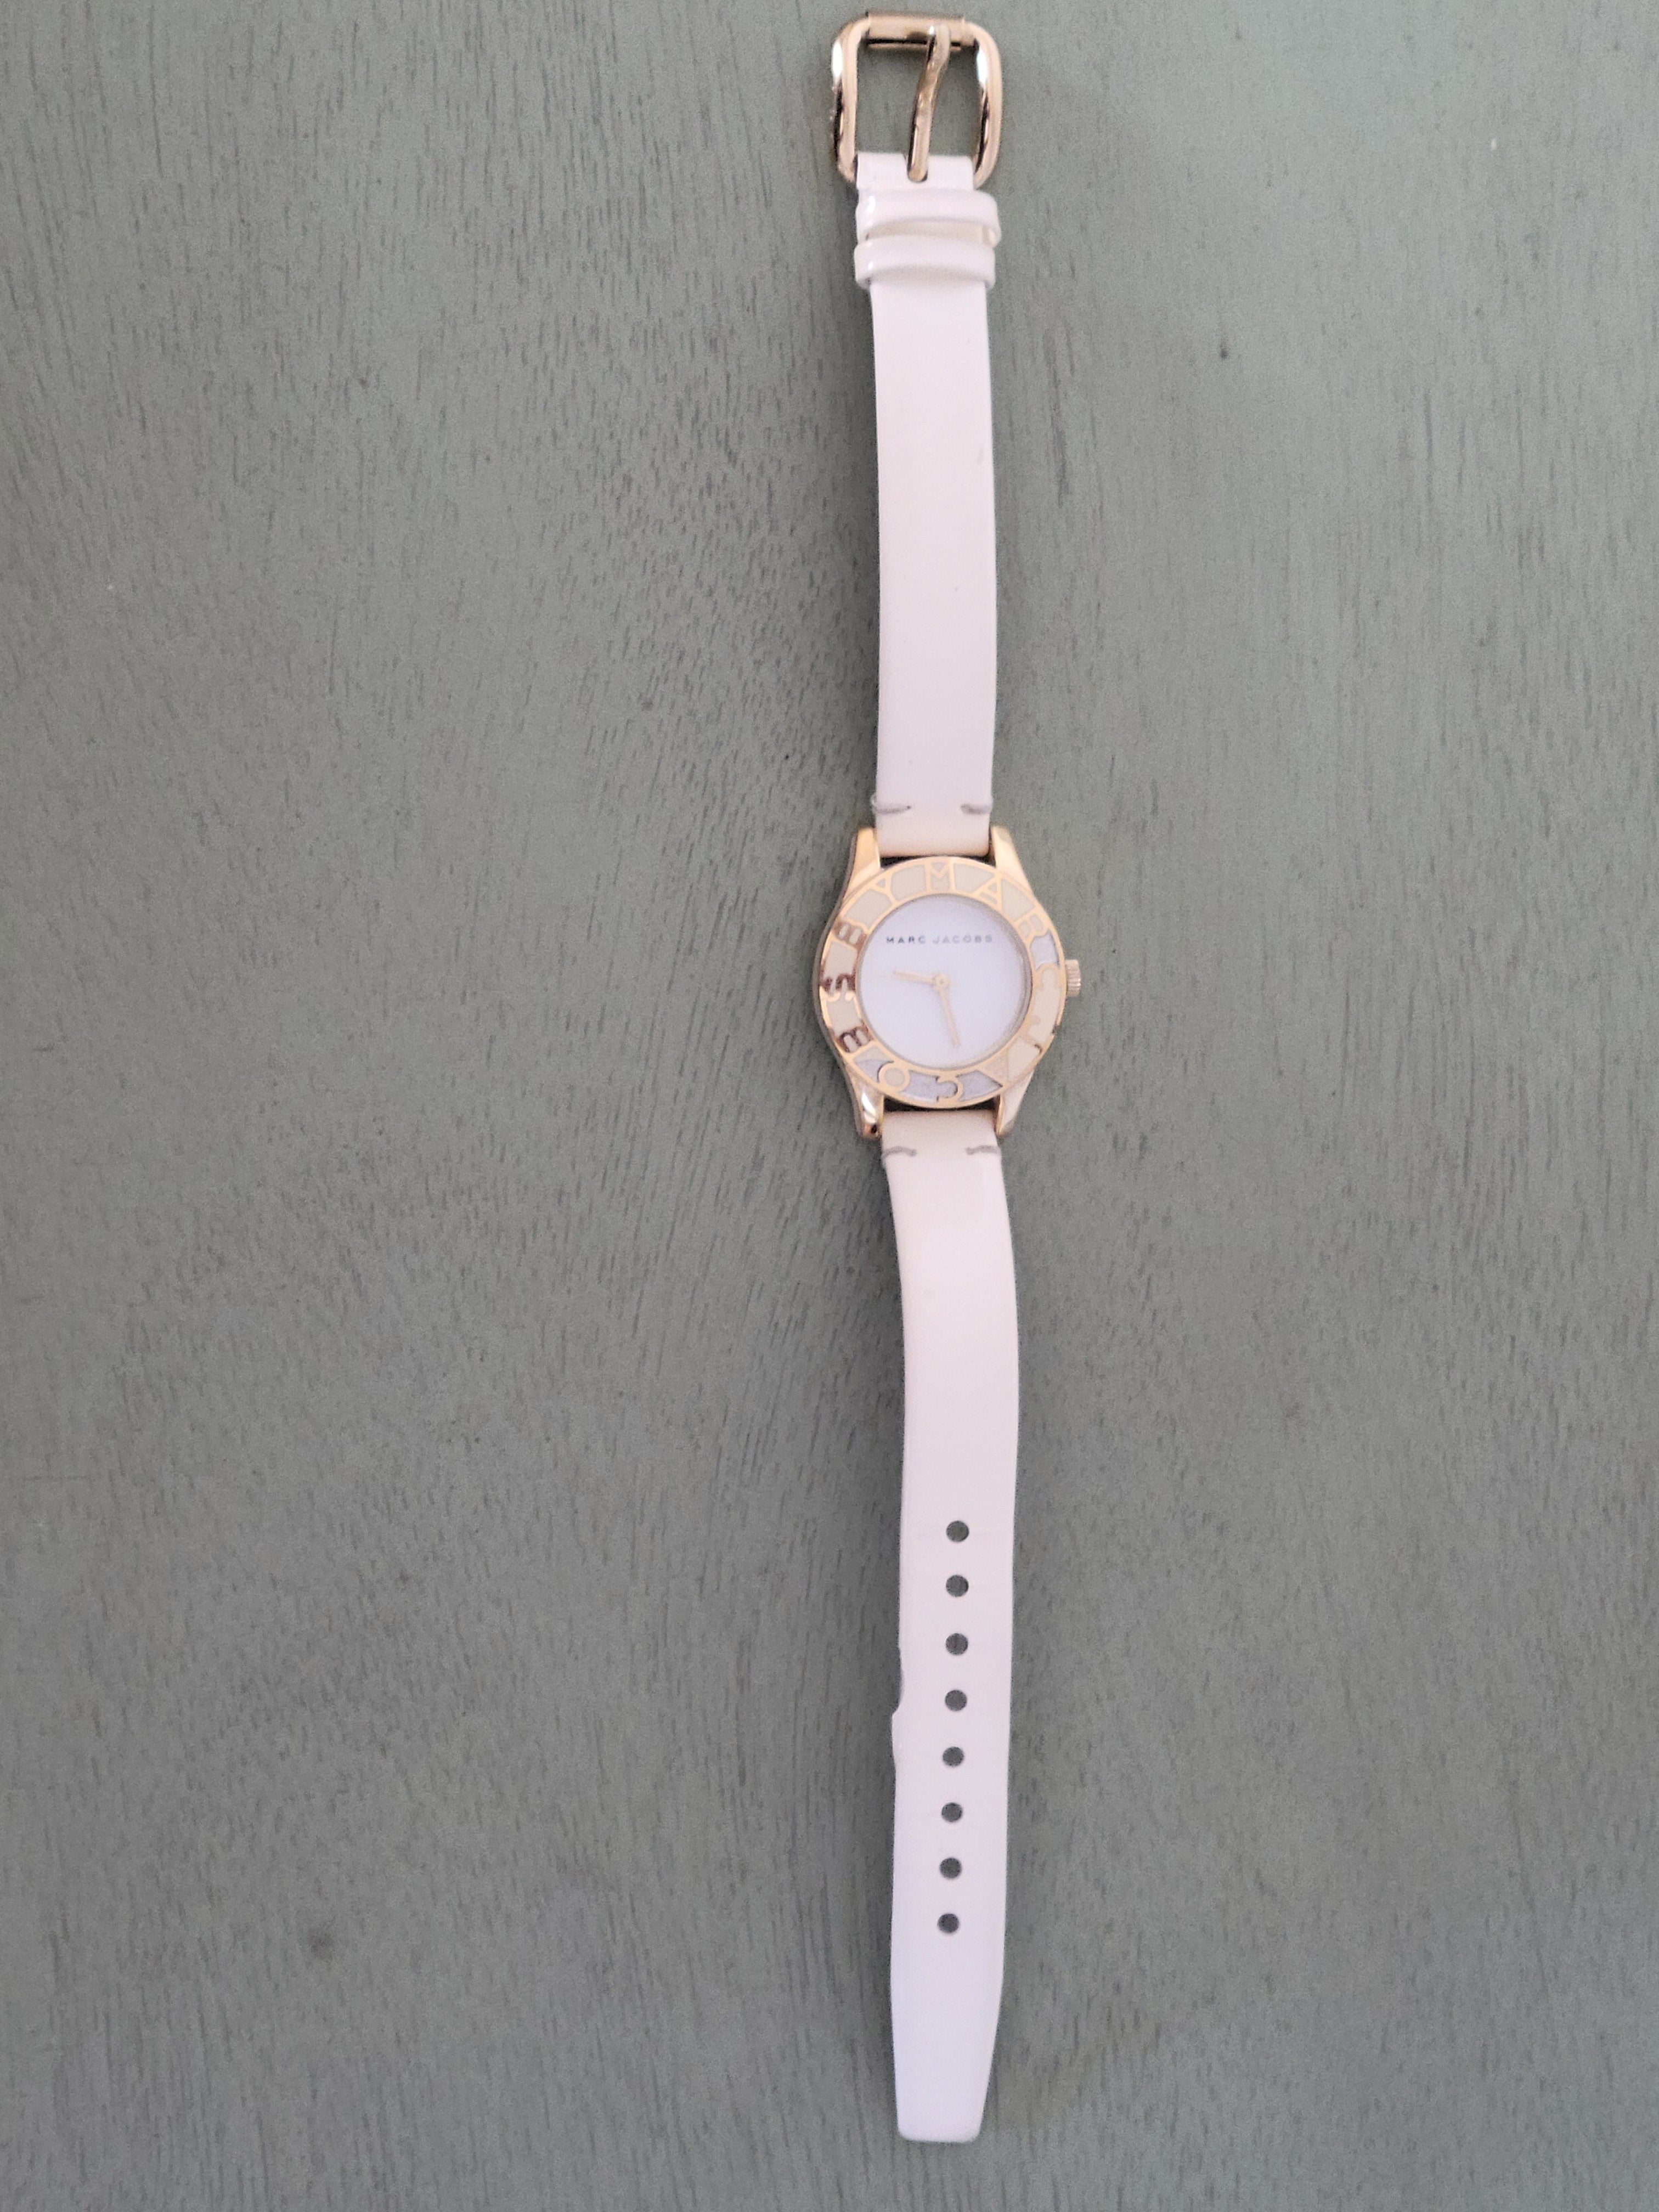 Marc Jacobs woman's wrist watch